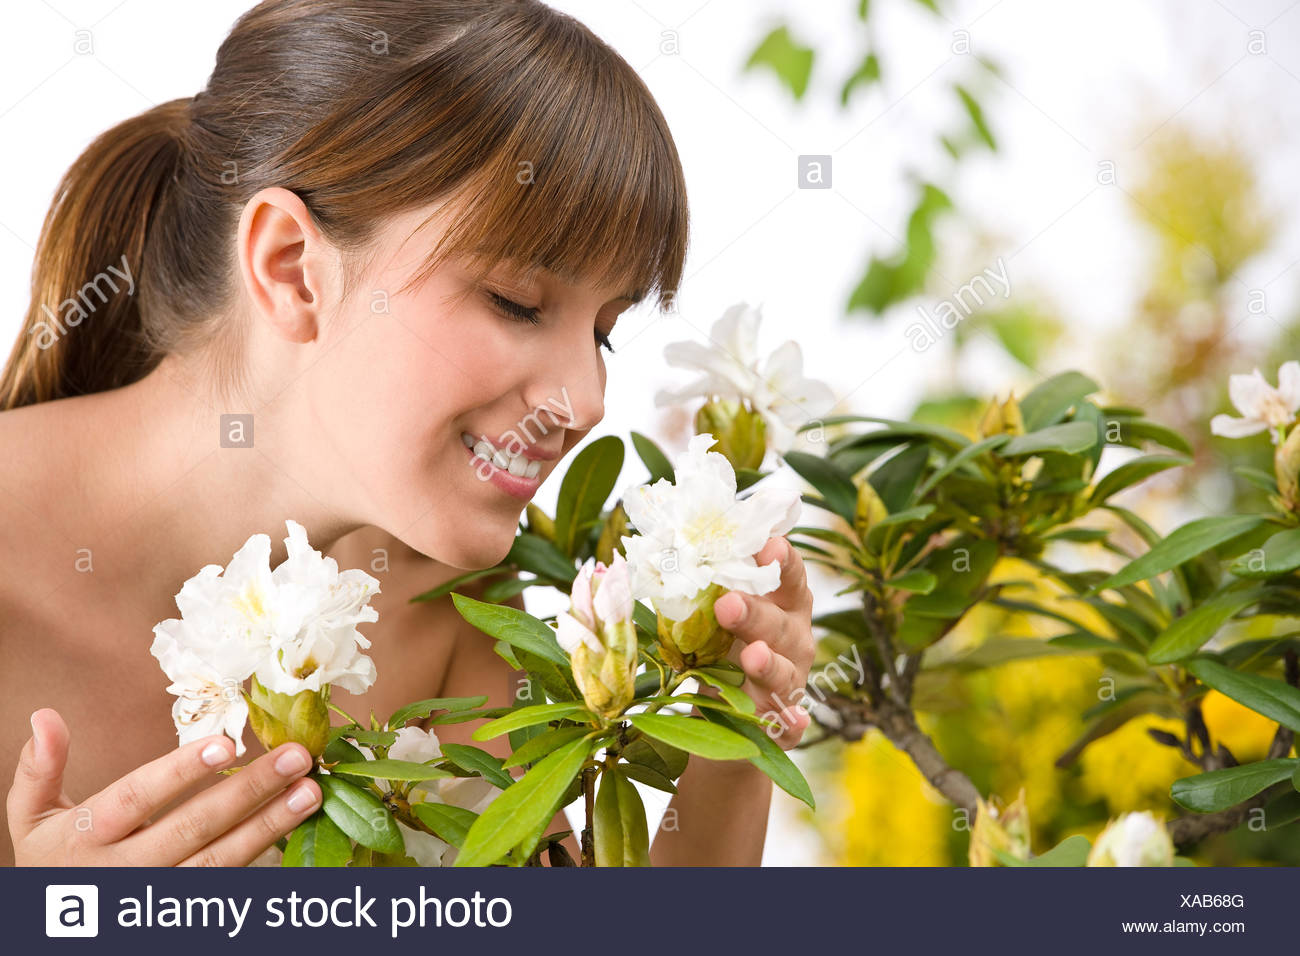 Человек нюхает цветок